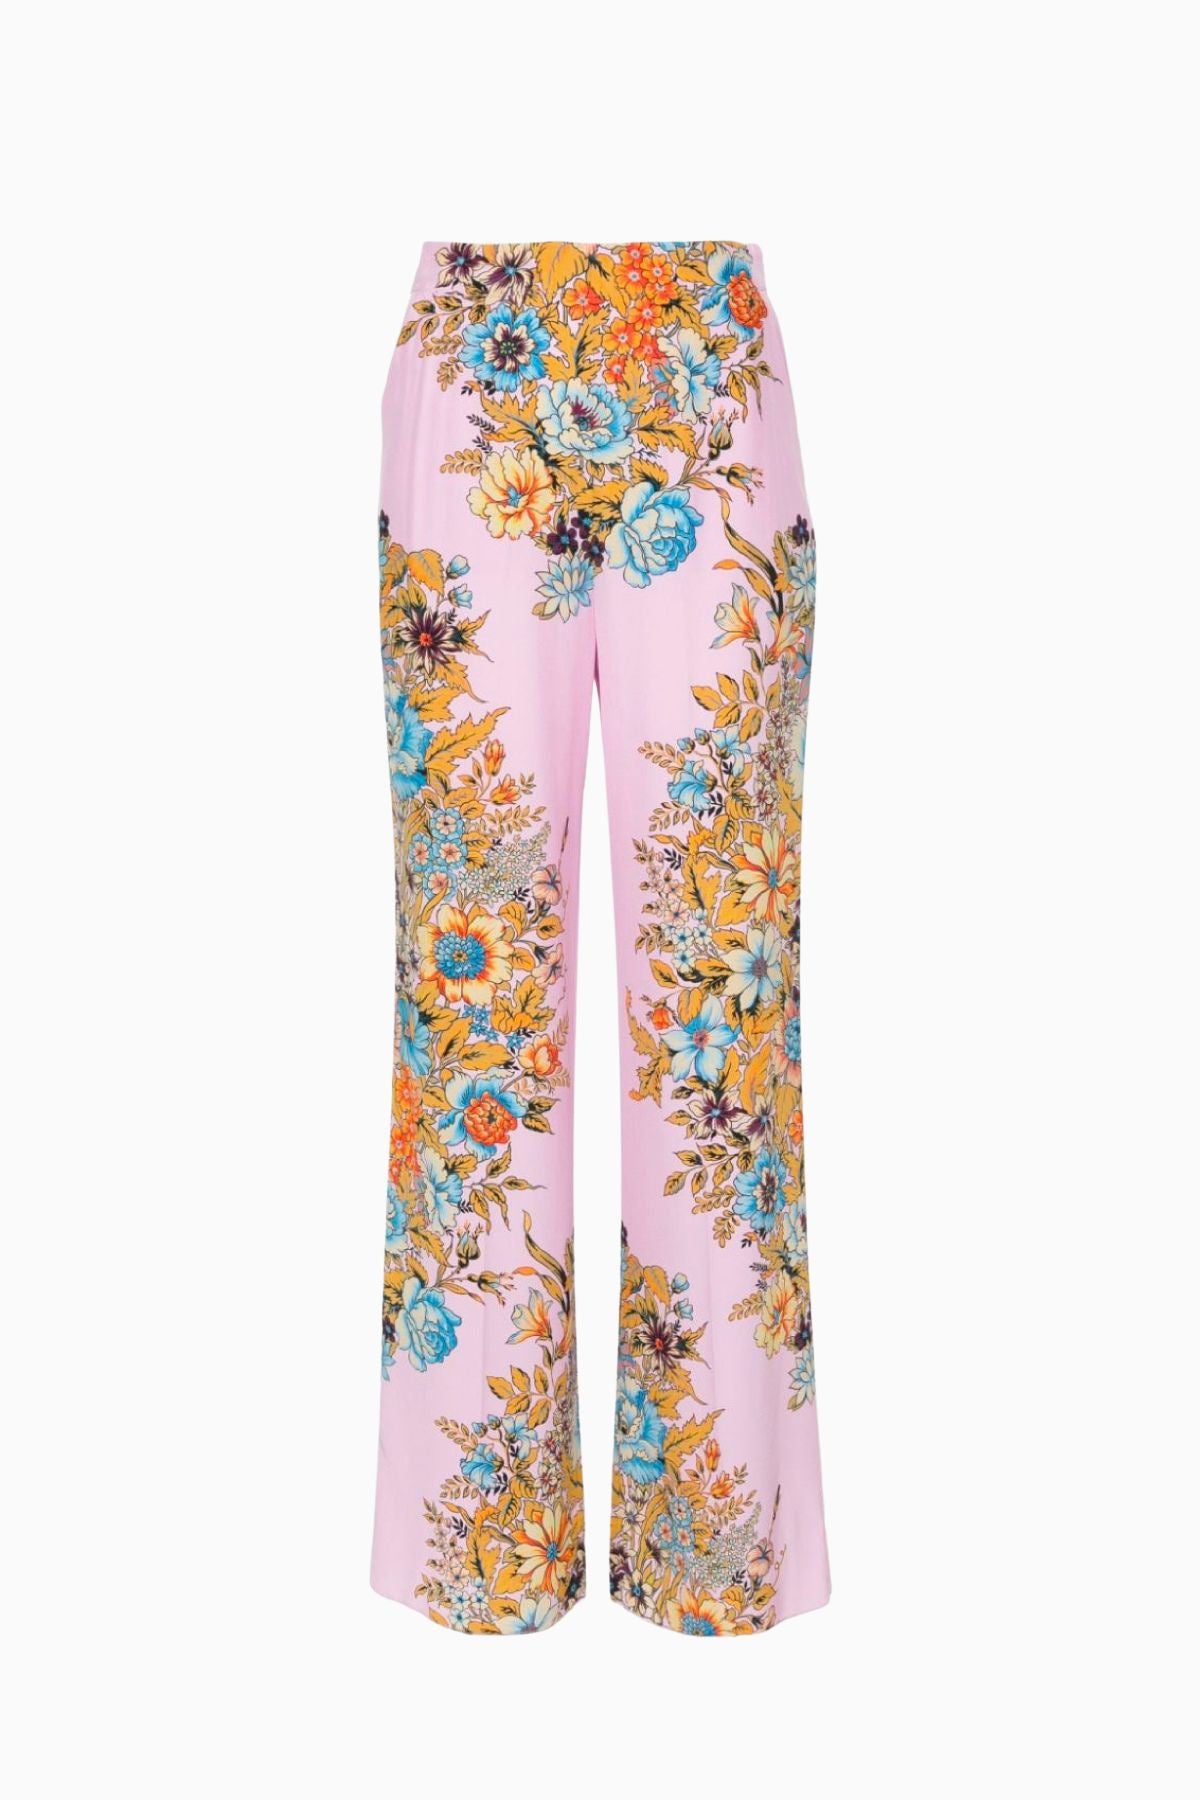 Etro Floral Silk Pyjama Pant - Pink Multi